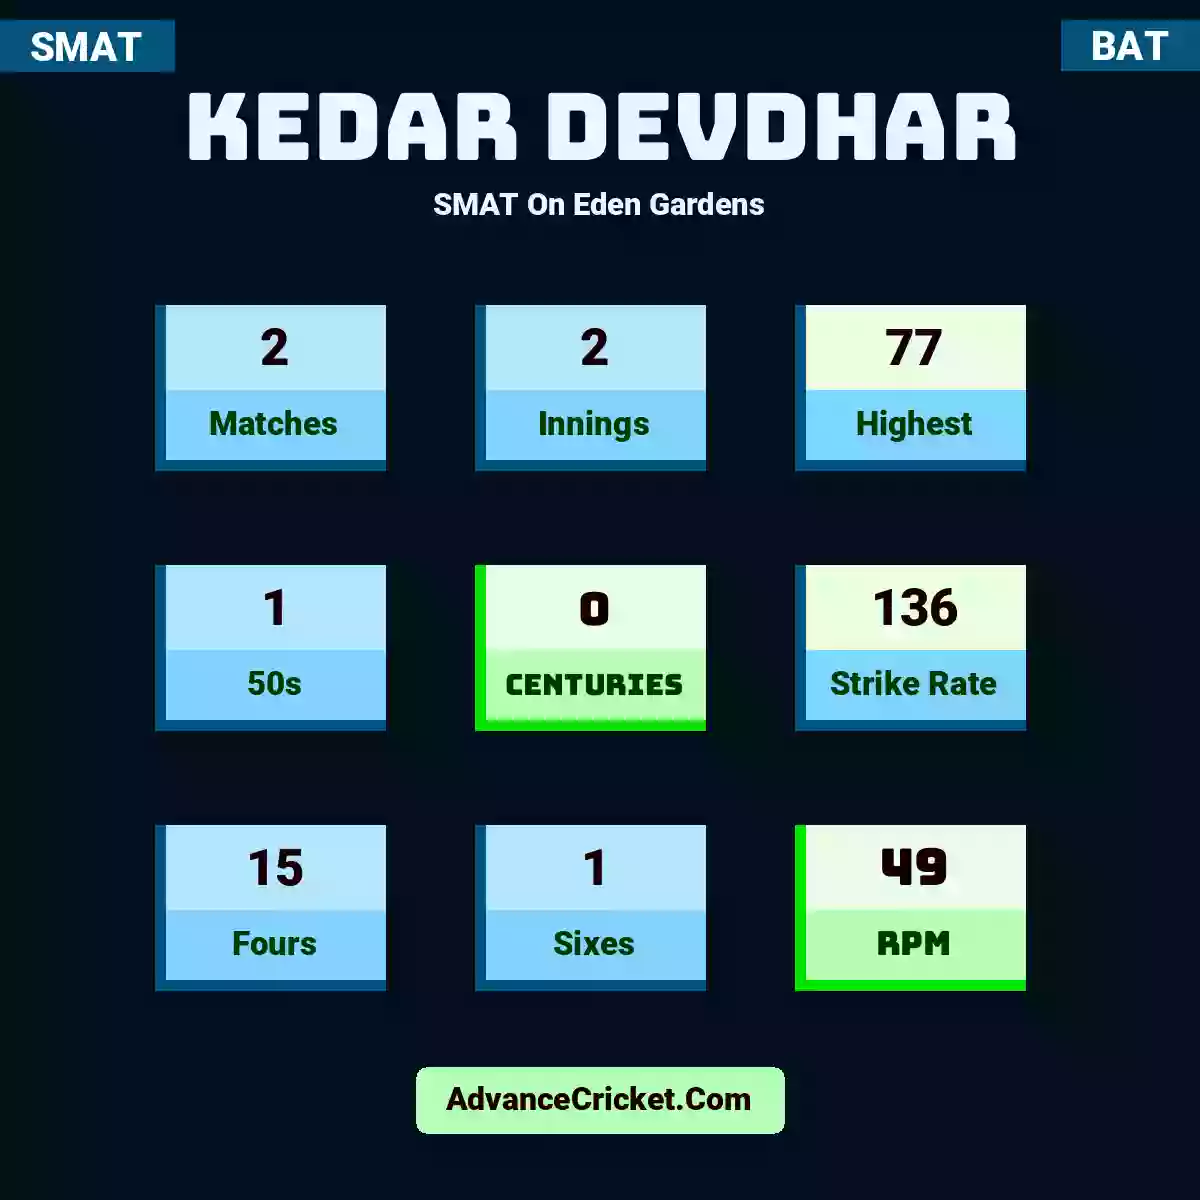 Kedar Devdhar SMAT  On Eden Gardens, Kedar Devdhar played 2 matches, scored 77 runs as highest, 1 half-centuries, and 0 centuries, with a strike rate of 136. K.Devdhar hit 15 fours and 1 sixes, with an RPM of 49.